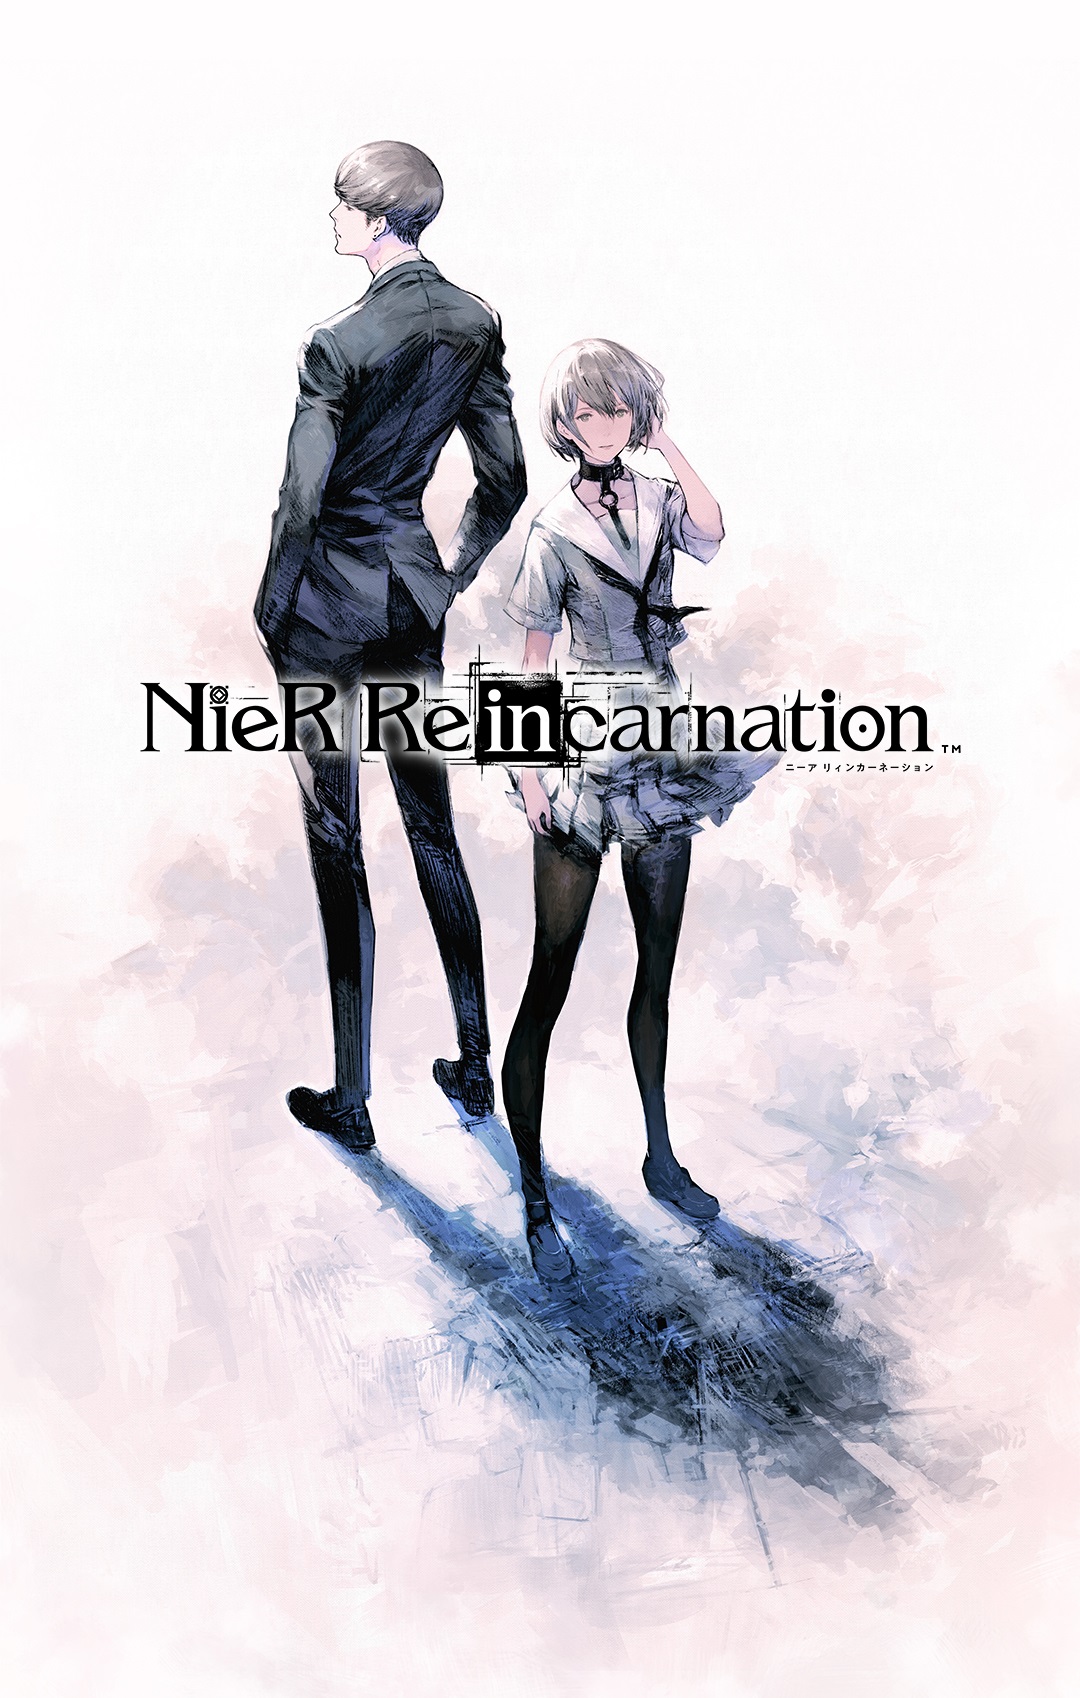 NieR Reincarnation